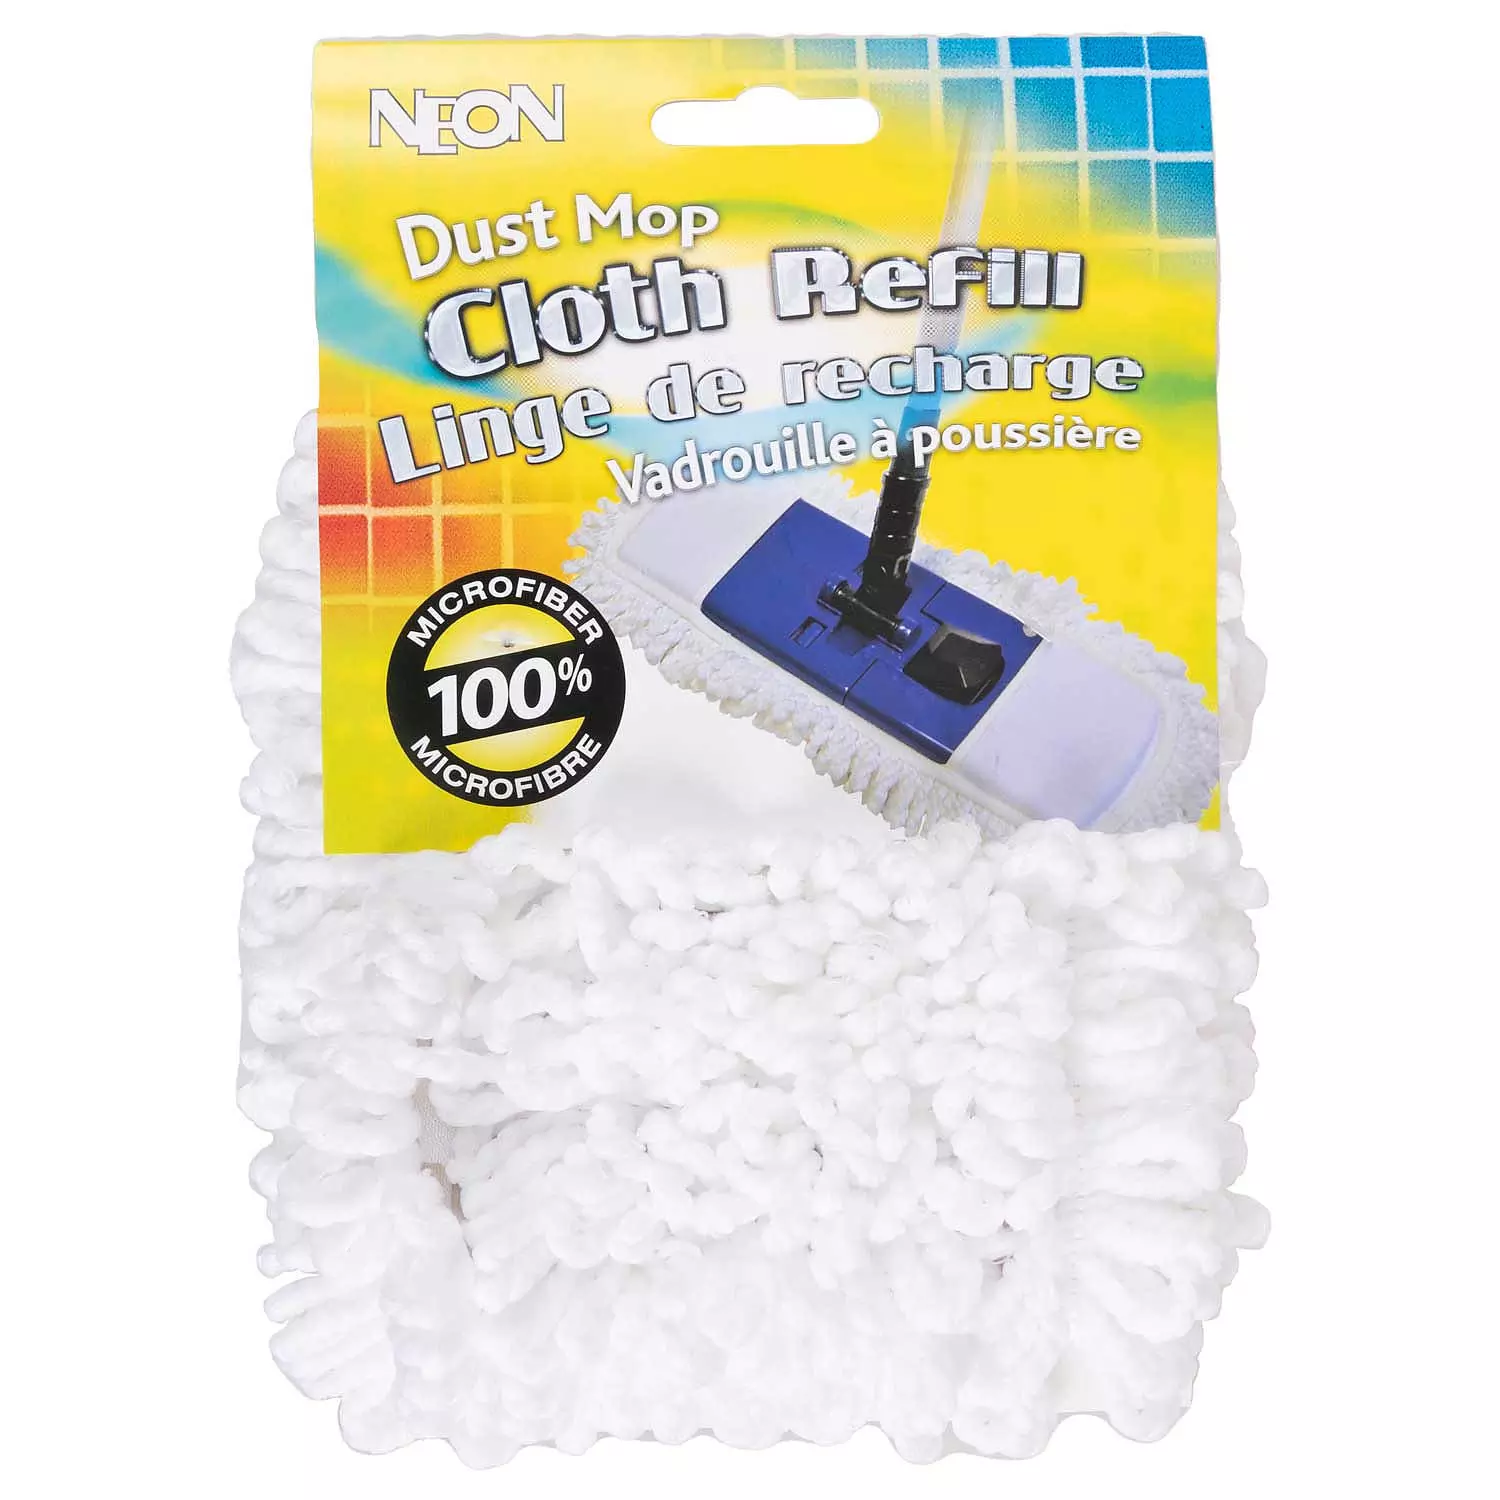 Dust mop cloth refill